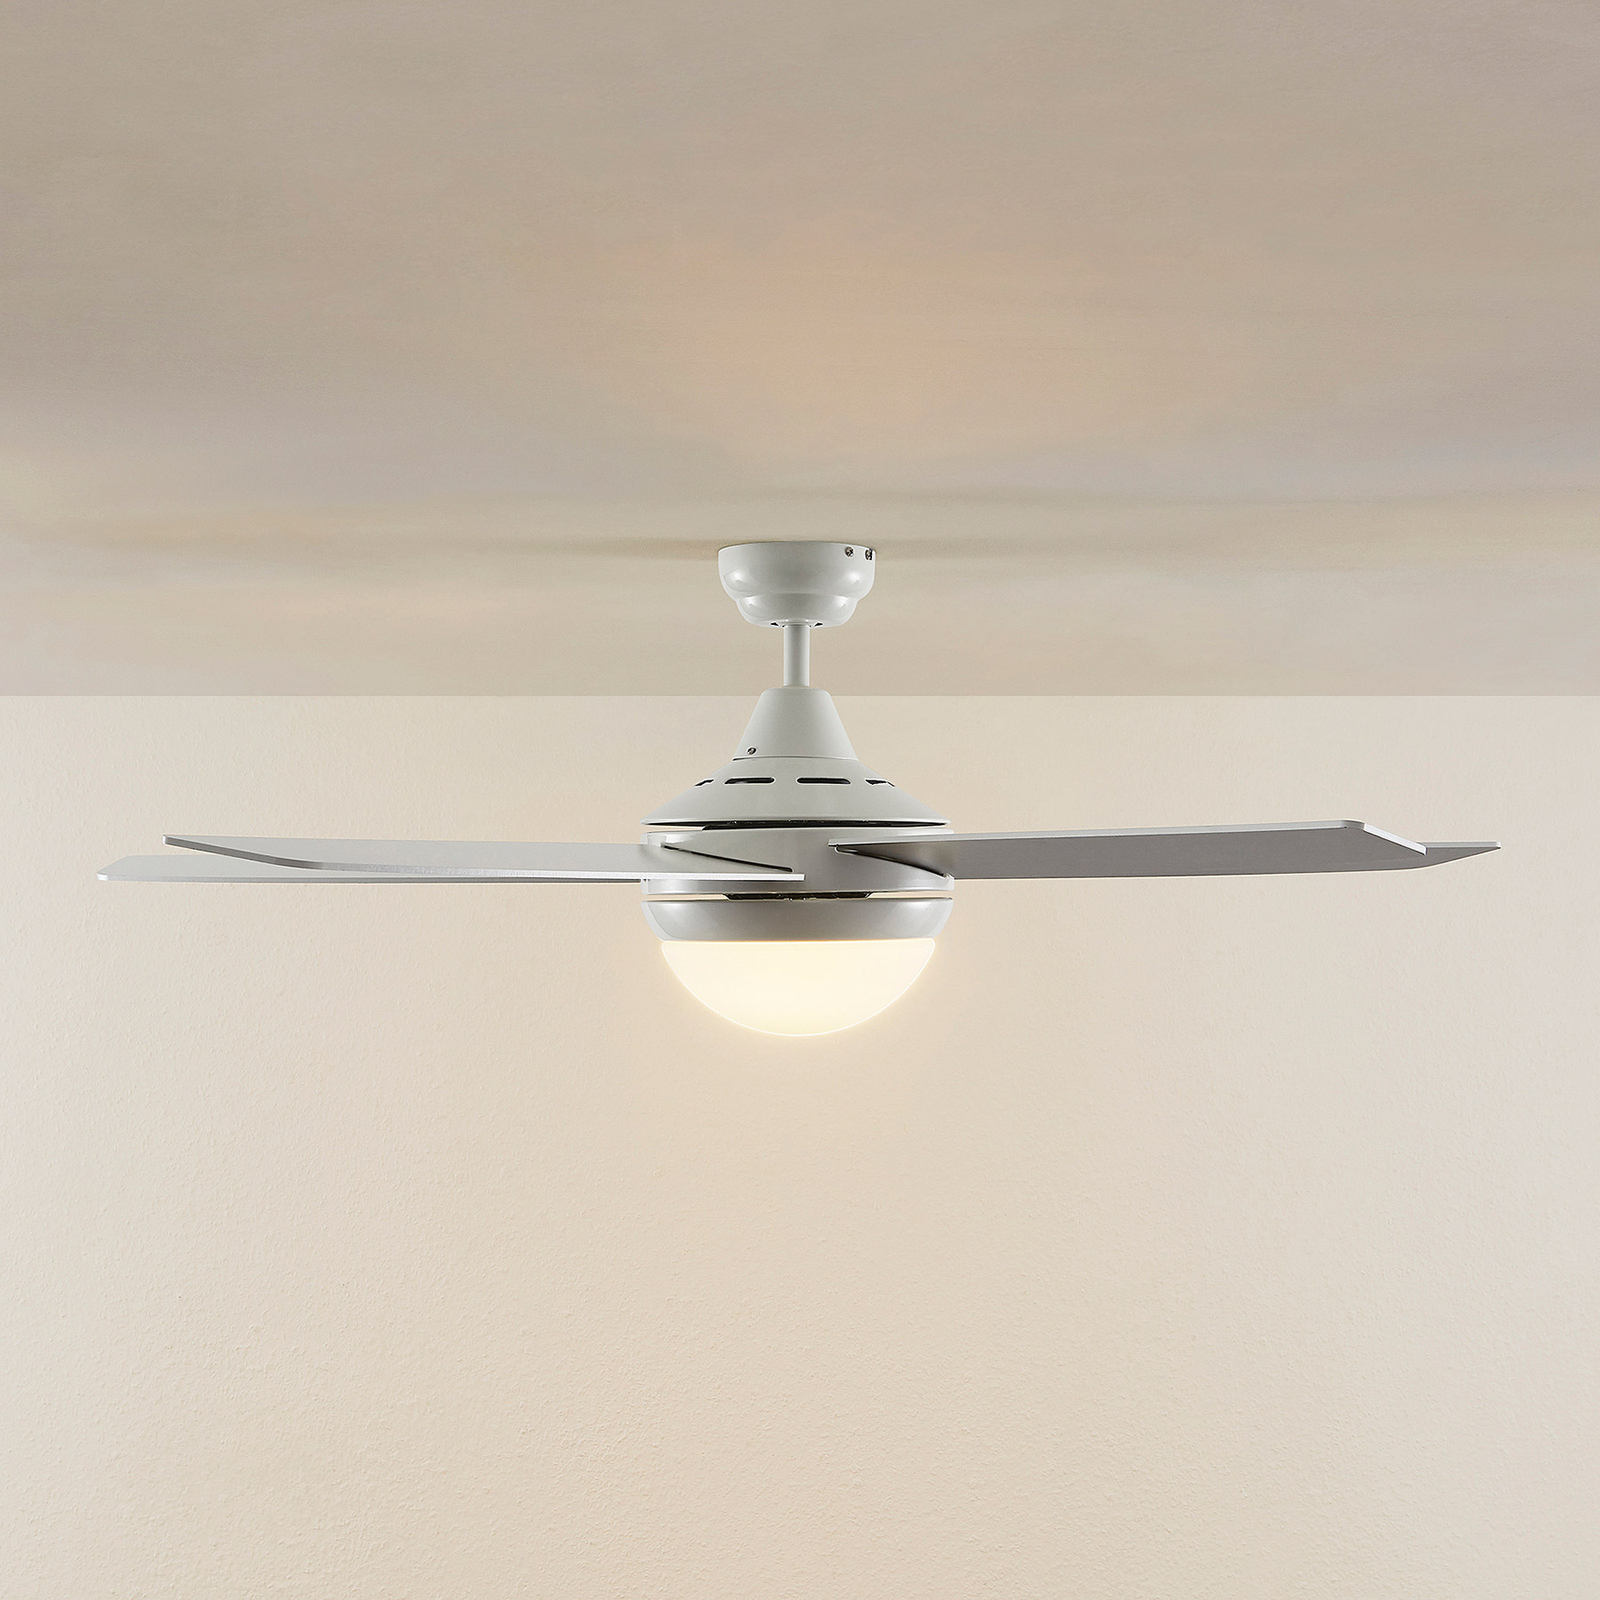 Starluna Auraya ceiling fan white/oak